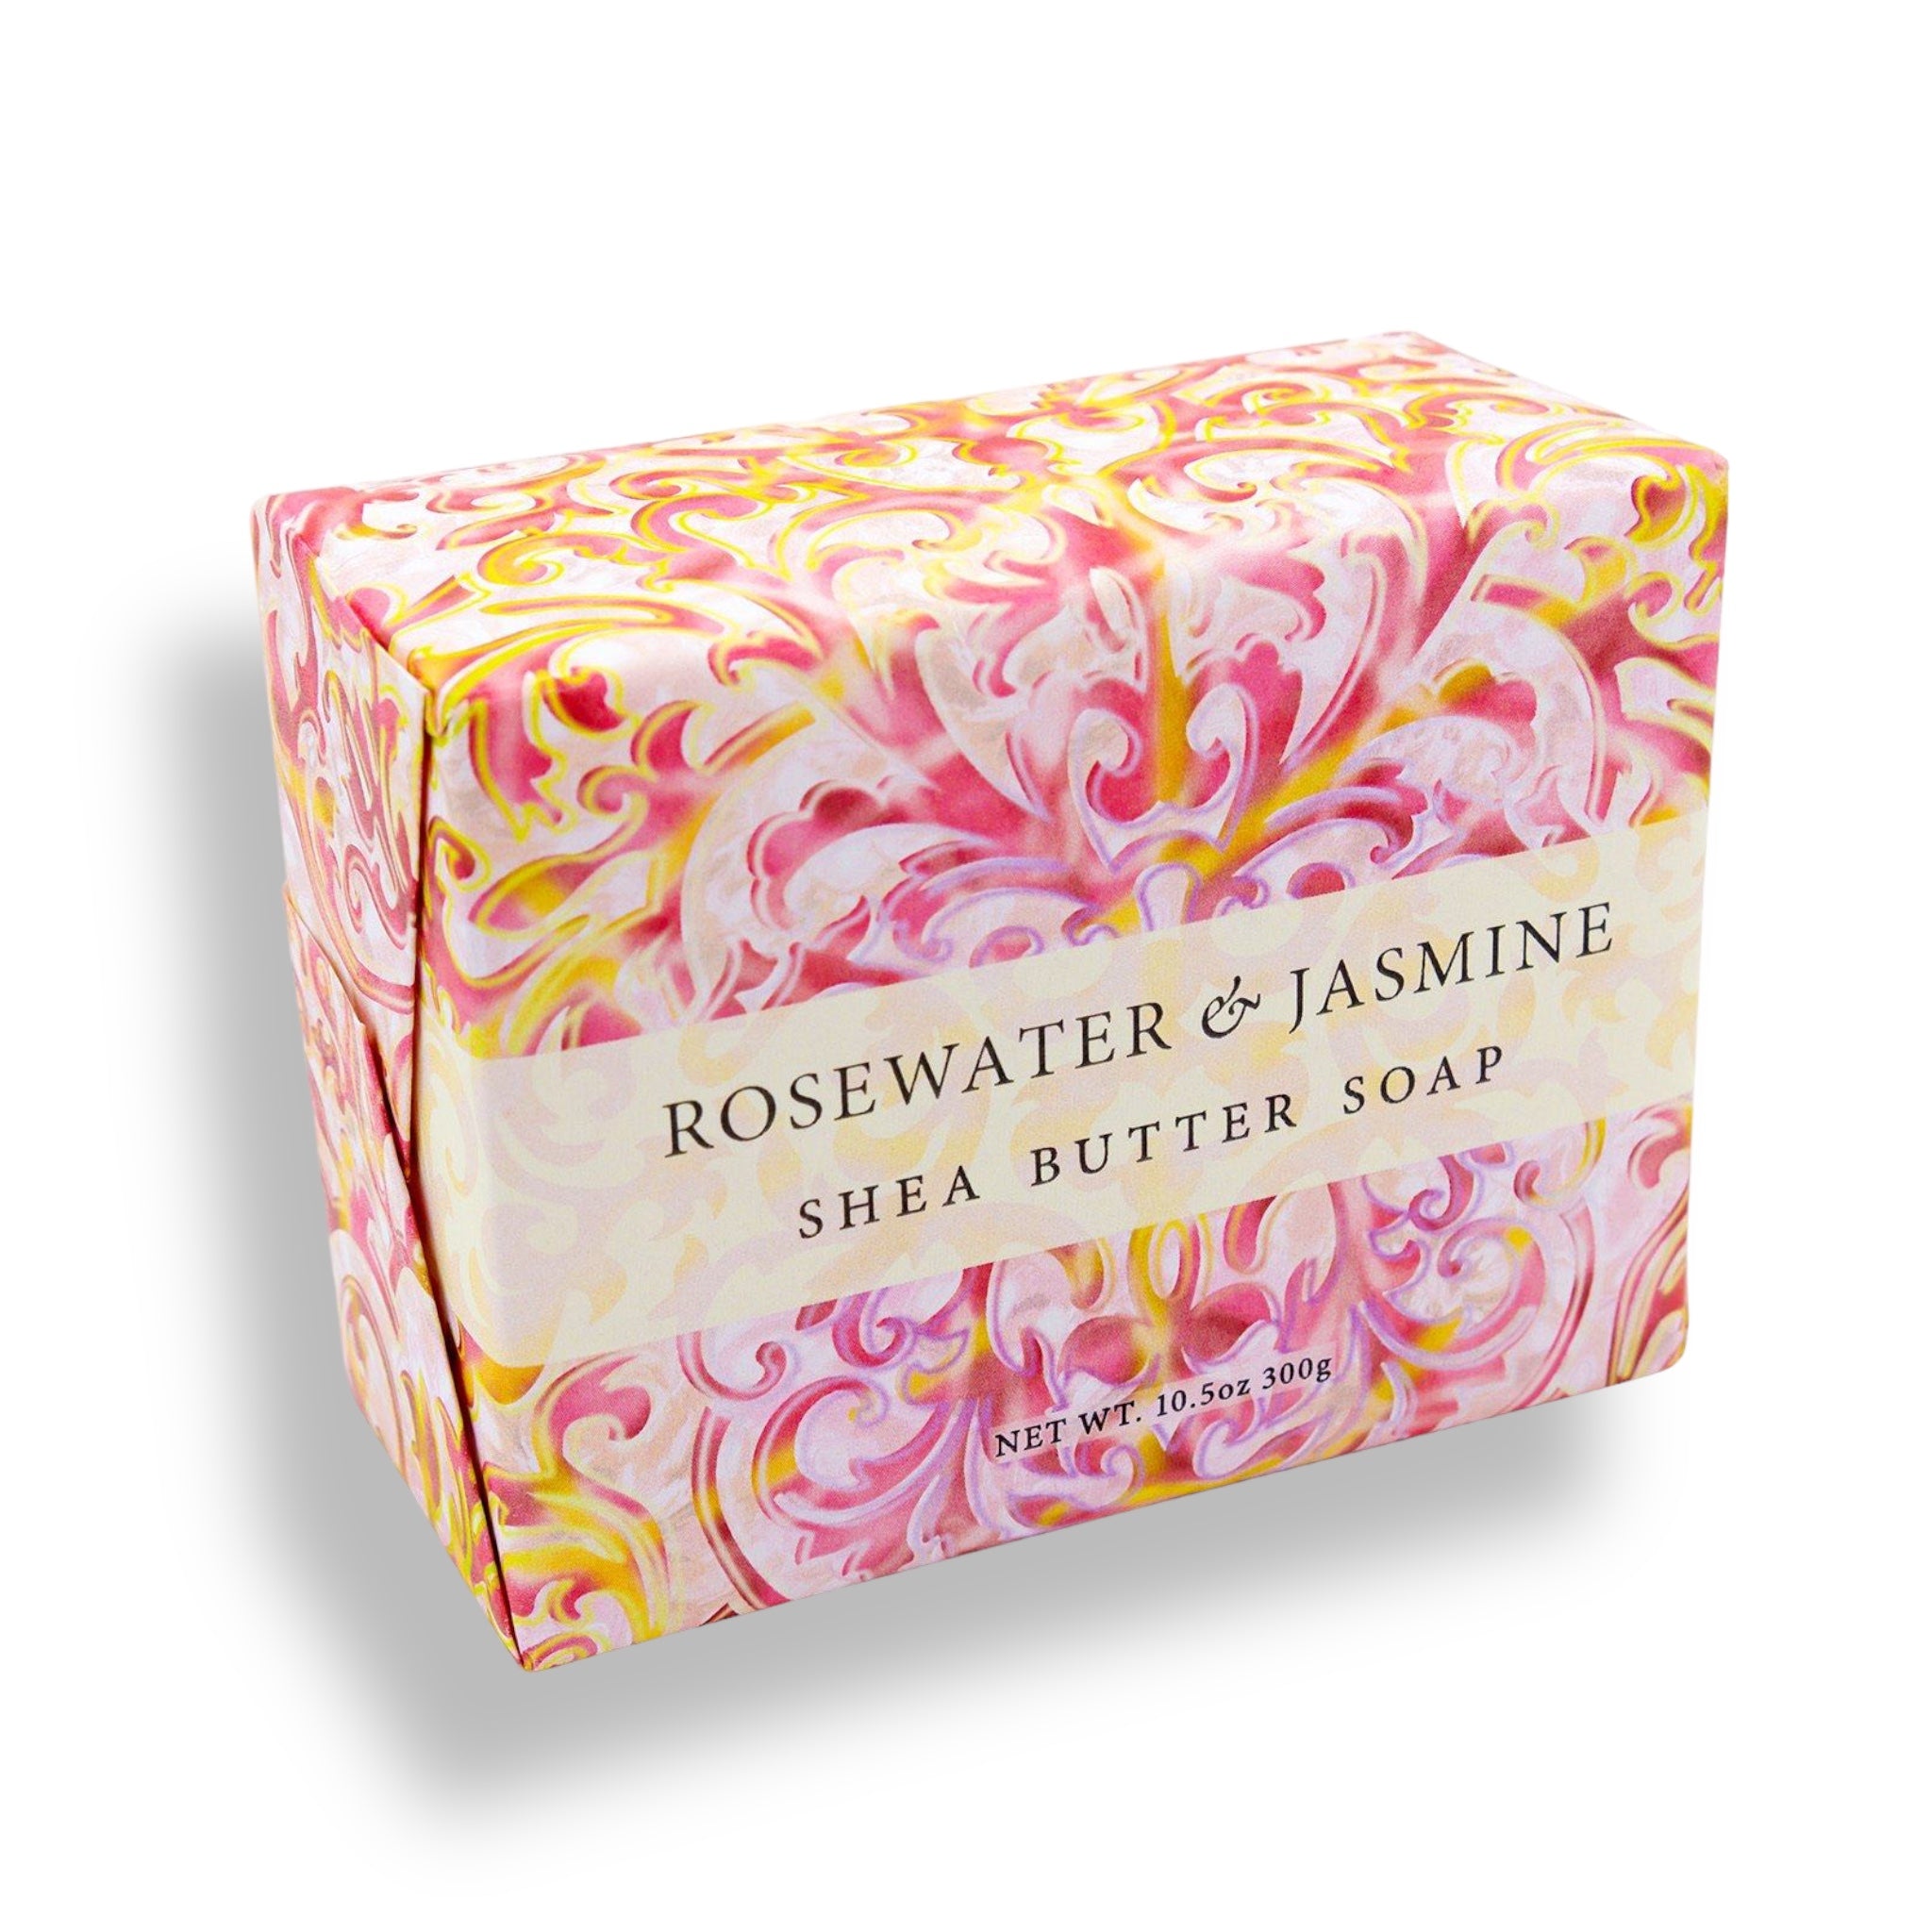 Greenwich Bay Trading Company Rosewater Jasmine Soap